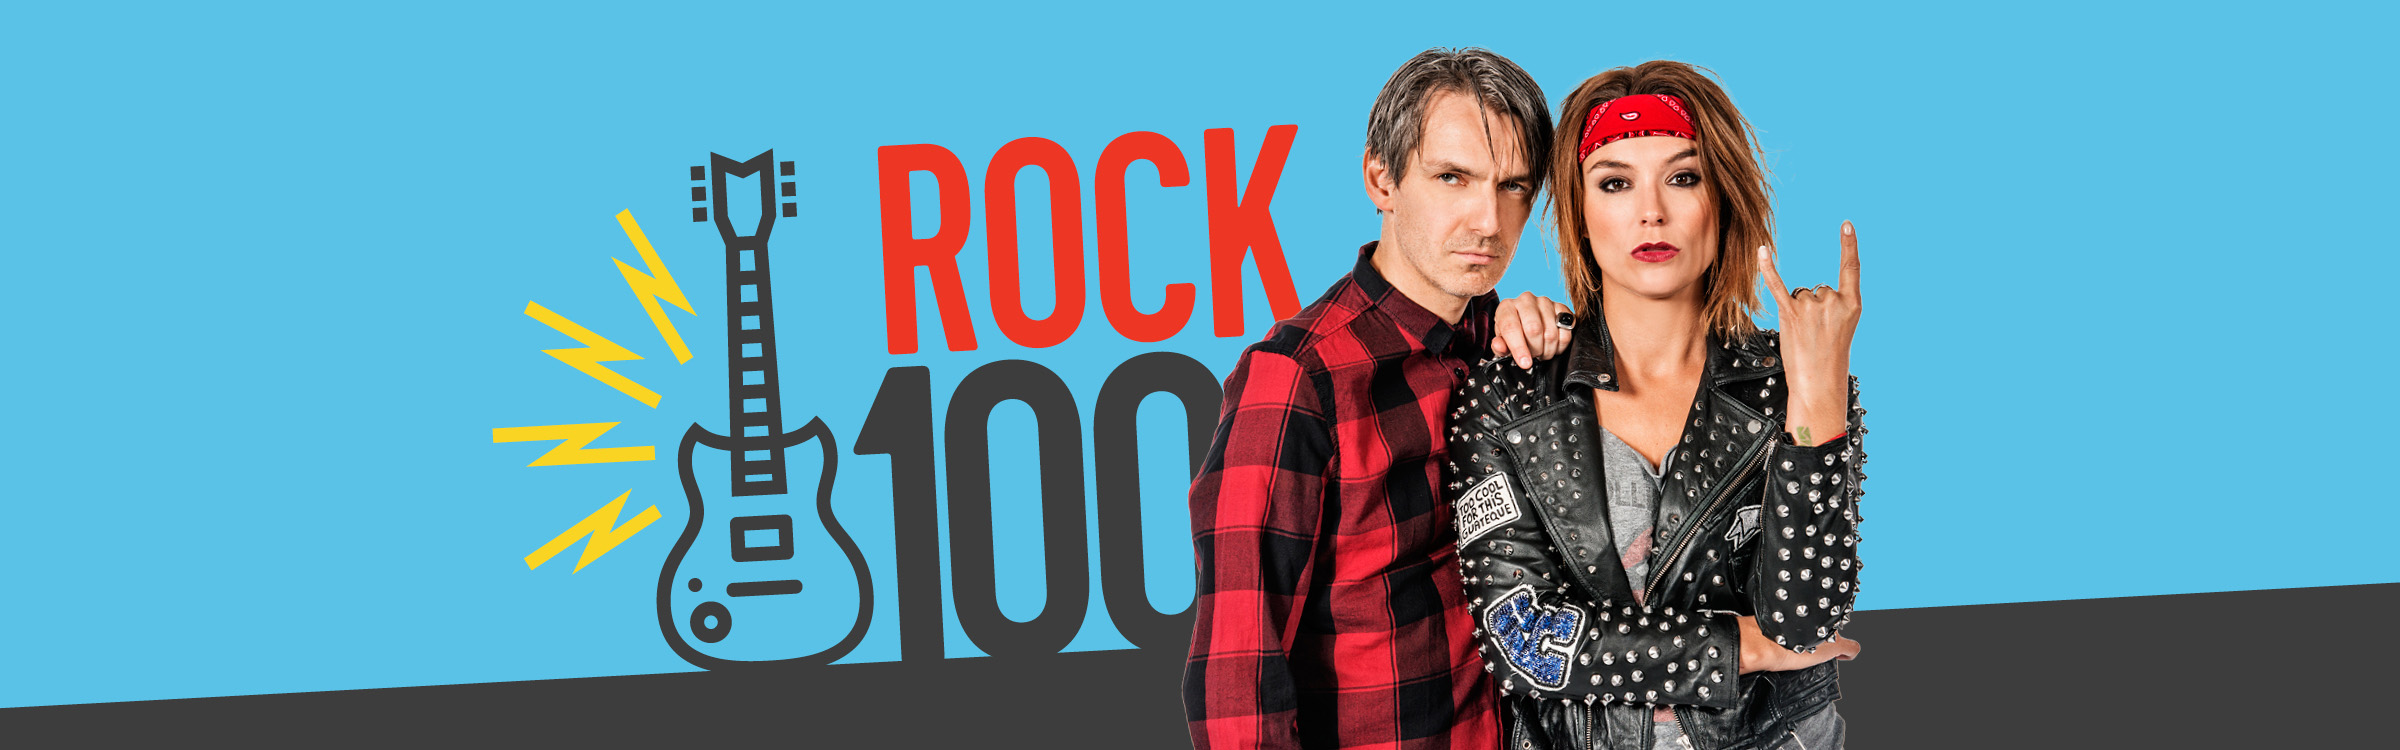 Rock100 header 1350x750